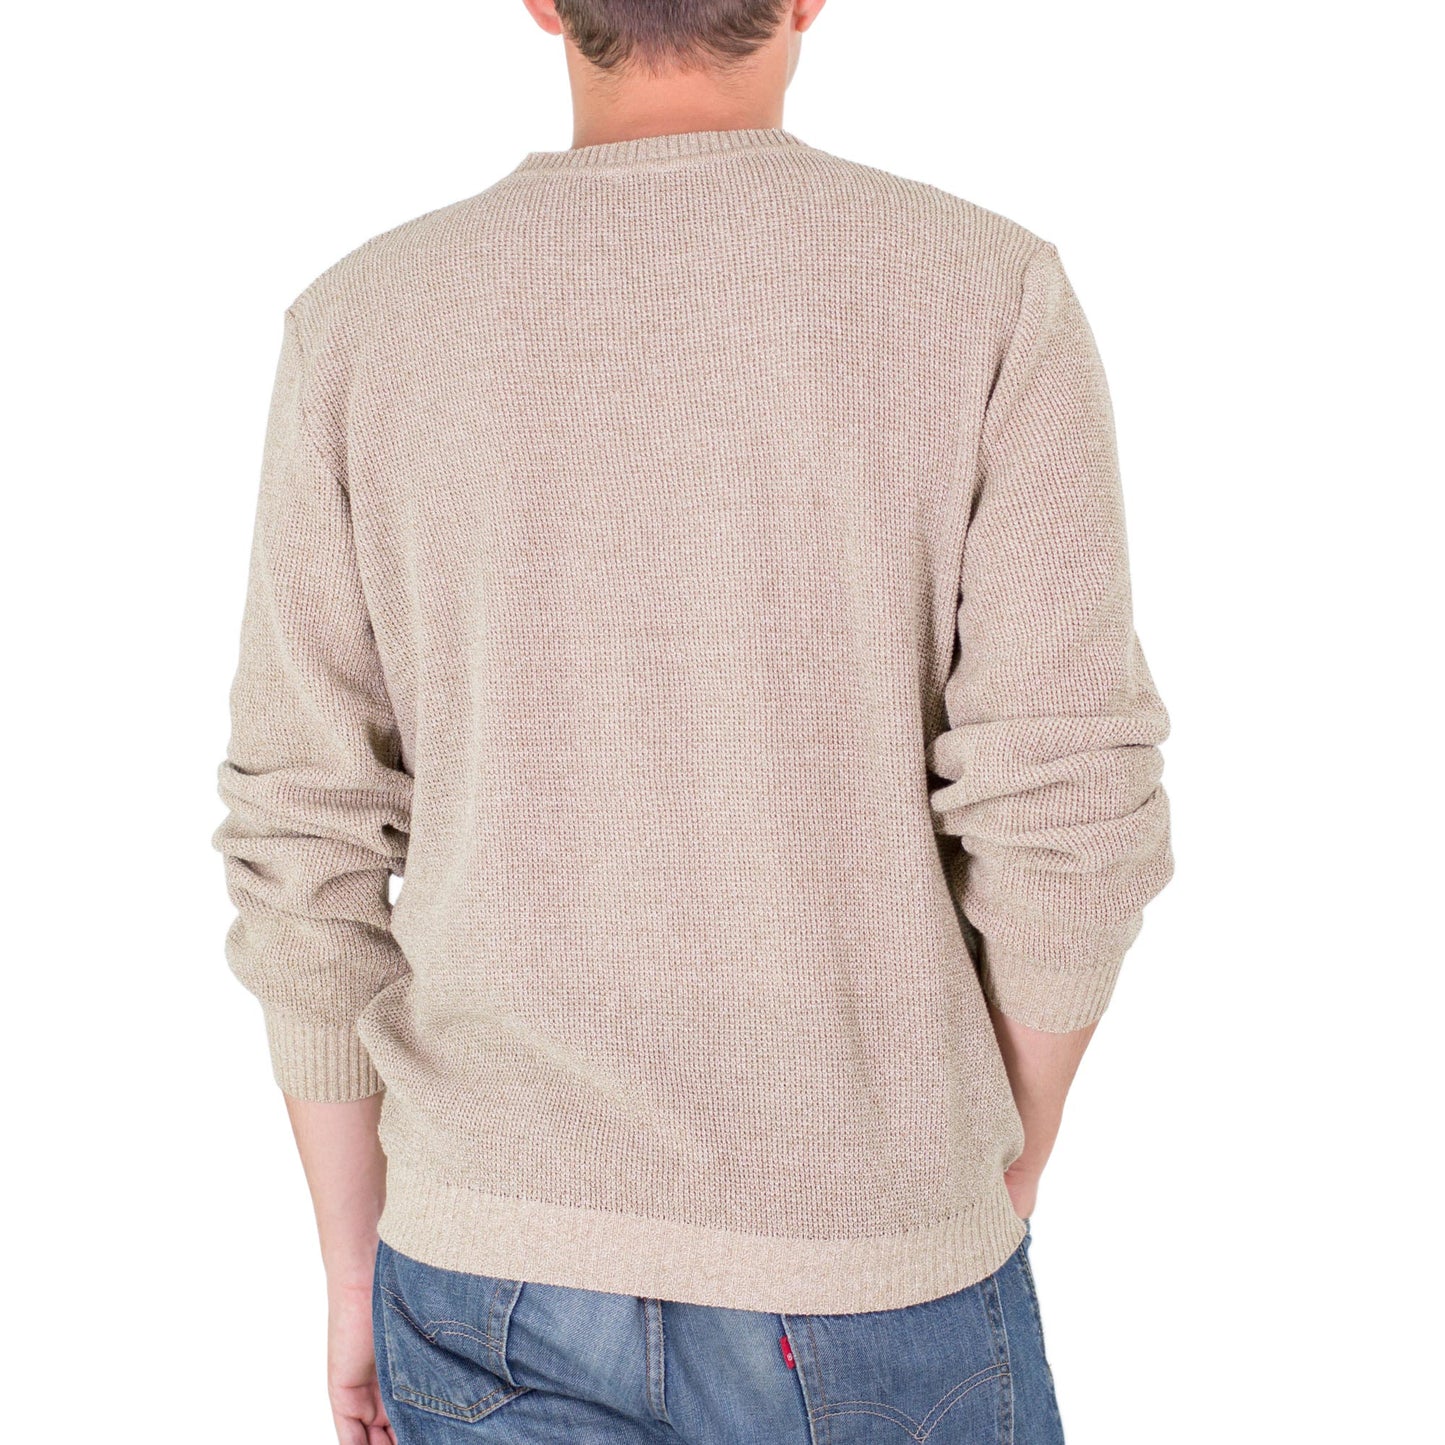 Sporting Elegance Men's Cotton Pullover Sweater